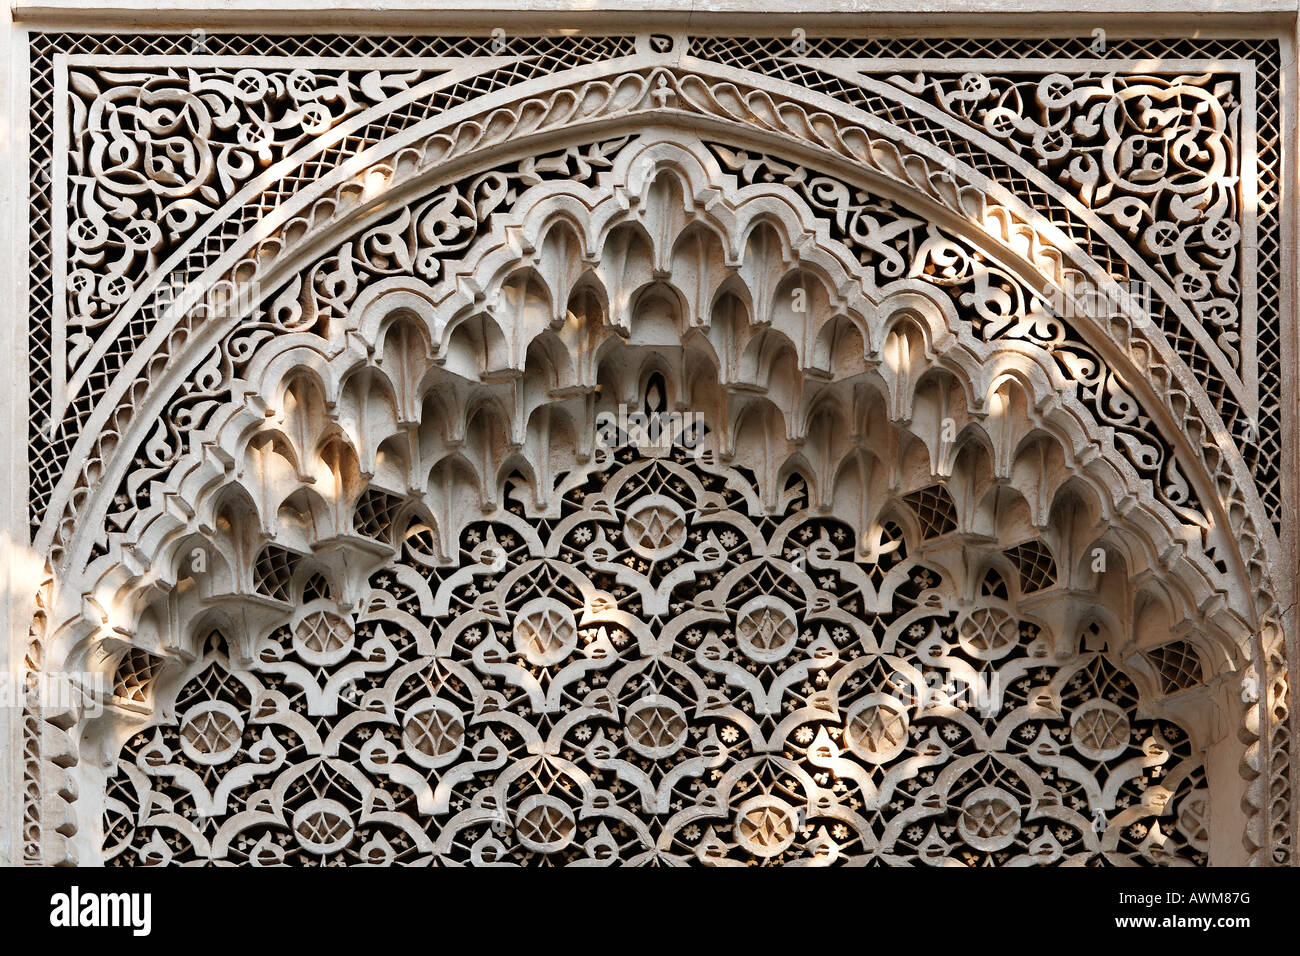 Stalactite decoration and artistic arabesque stucco work, Palais de la Bahia, Medina, Marrakech, Morocco, Africa Stock Photo